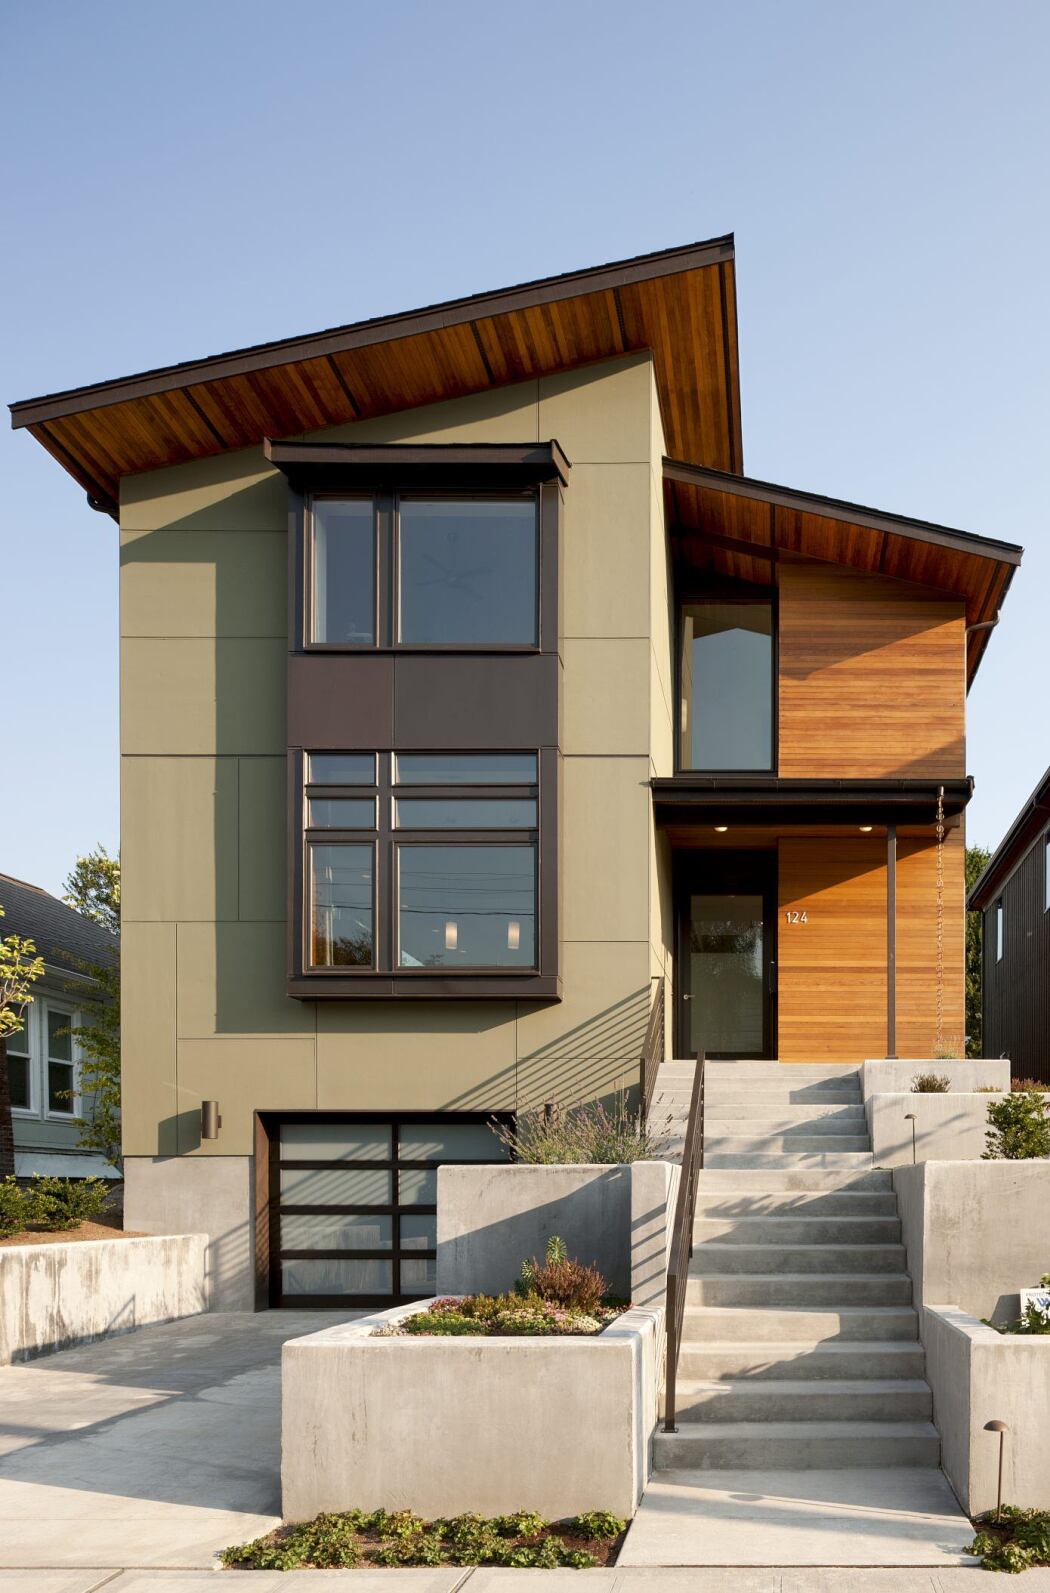 Green Lake Residence by Coates Design - 1